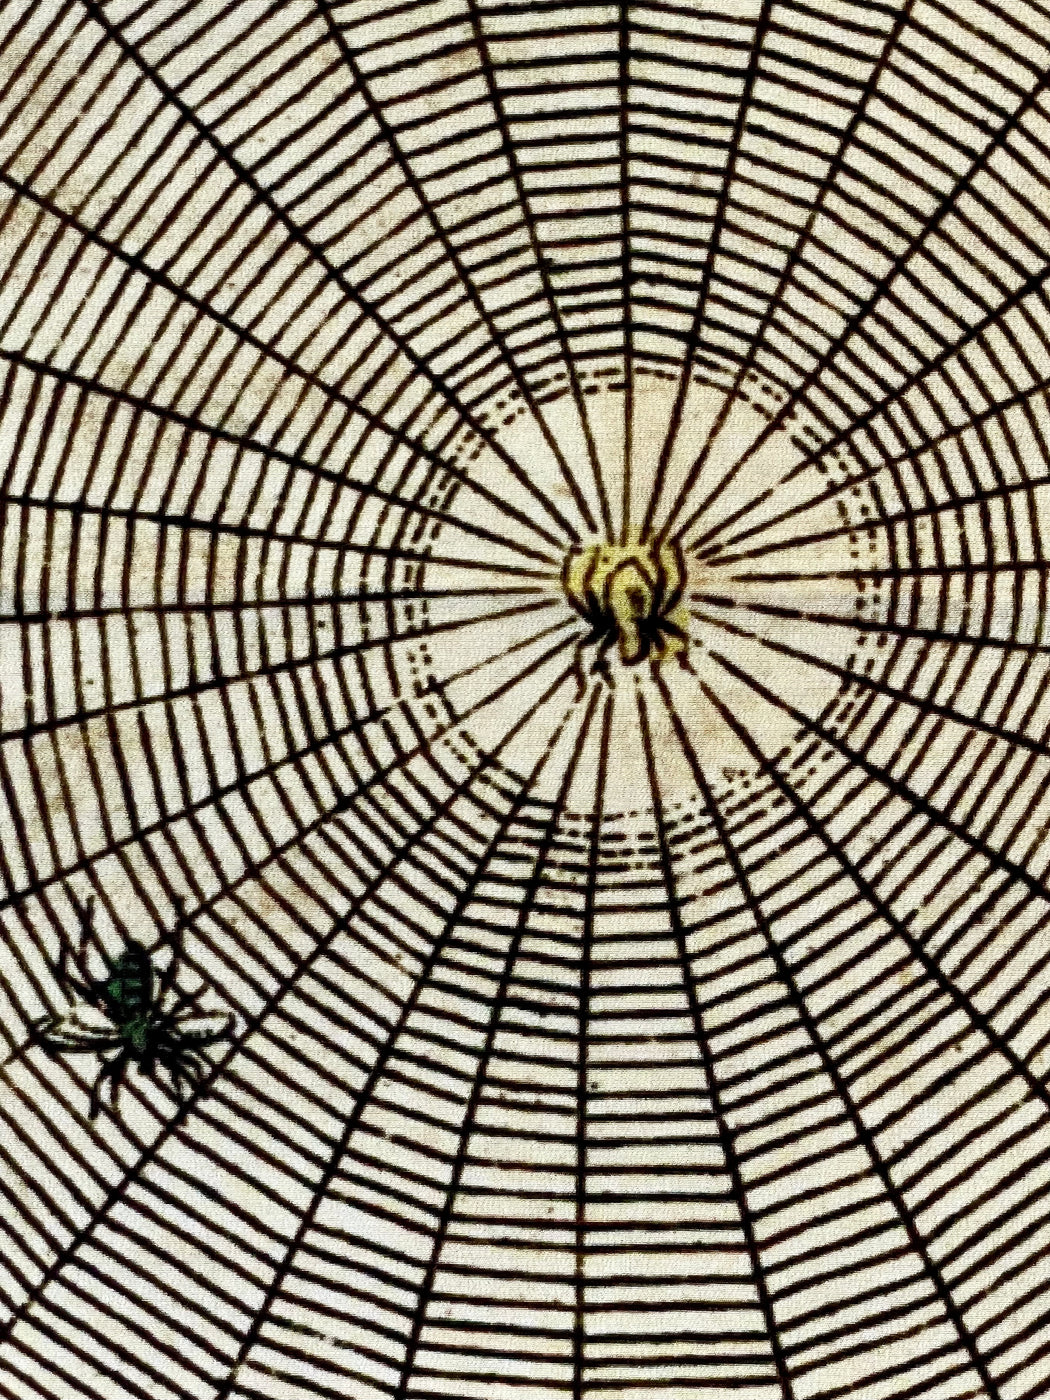 "Spider Web" Silk Pocket Square by John Derian